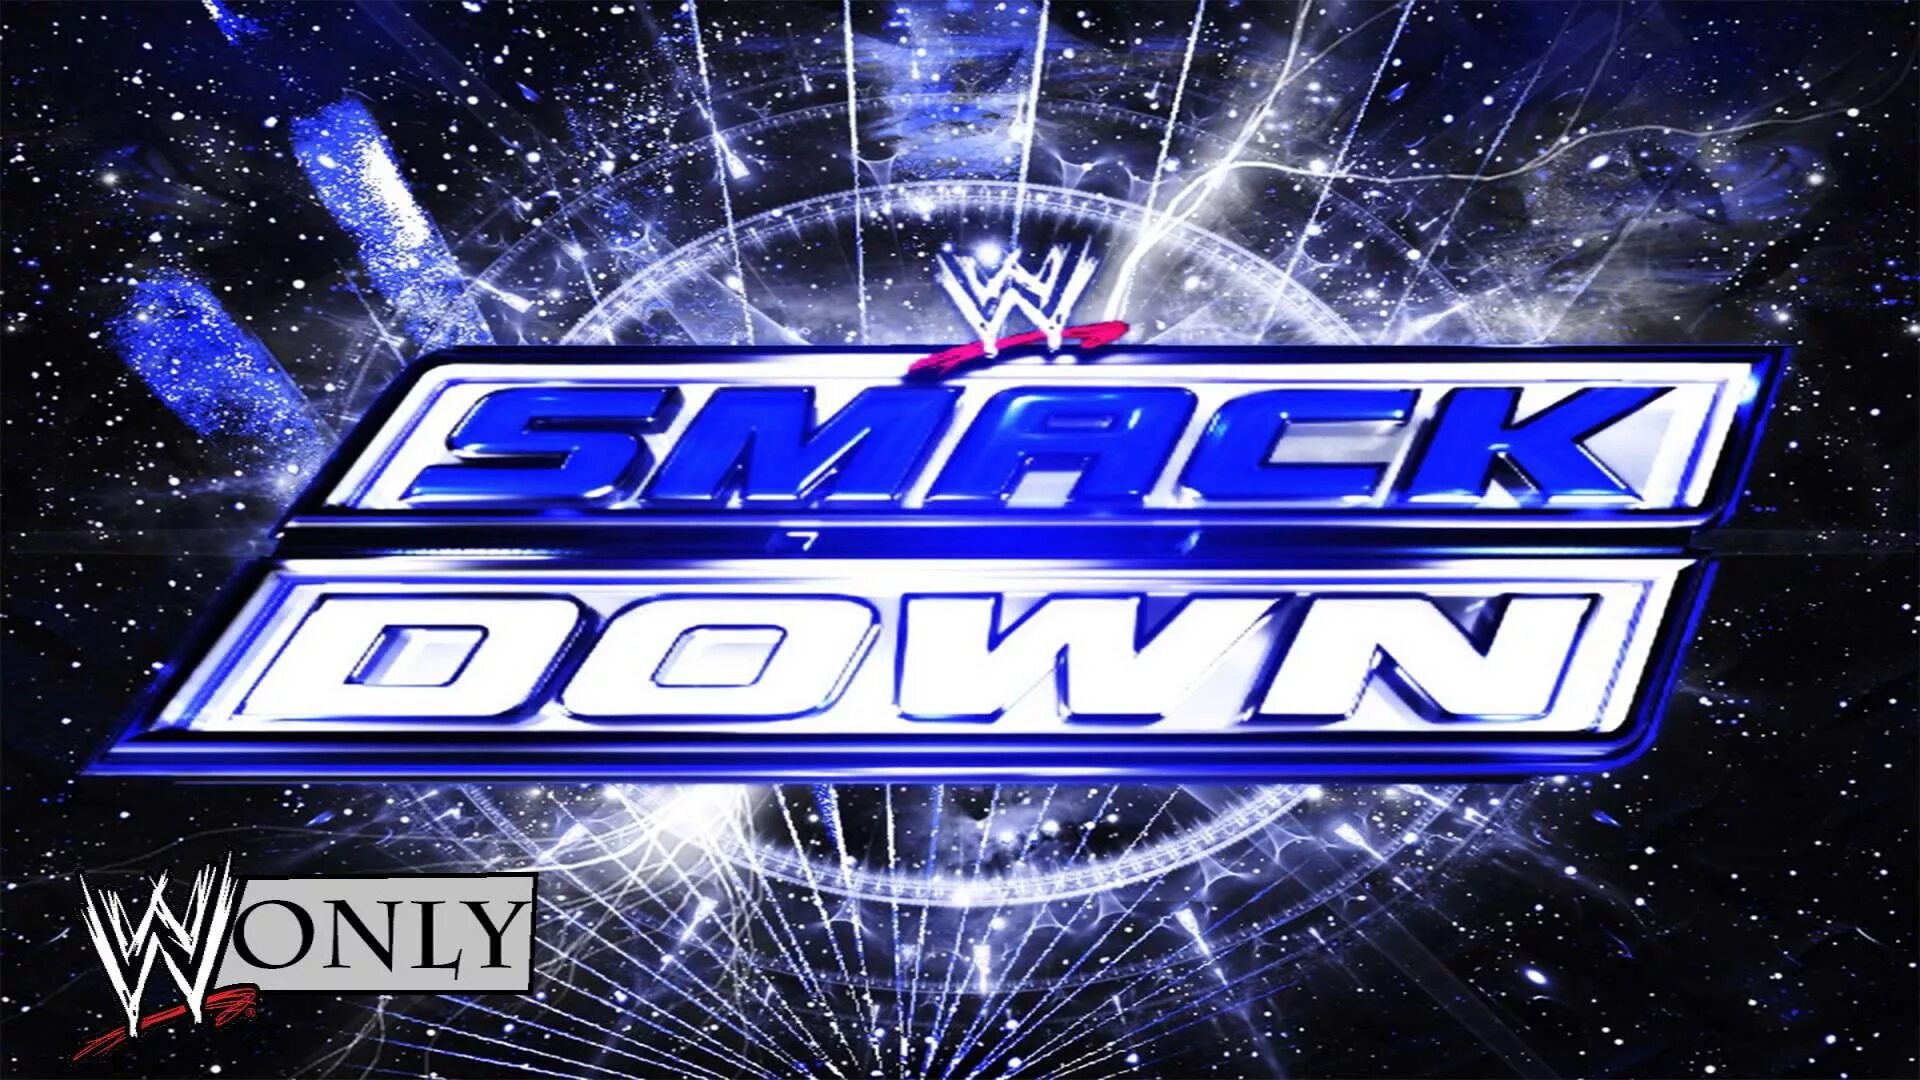 WWE SMACKDOWN. SMACKDOWN logo. WWE SMACKDOWN 2013. Raw SMACKDOWN. Smack down